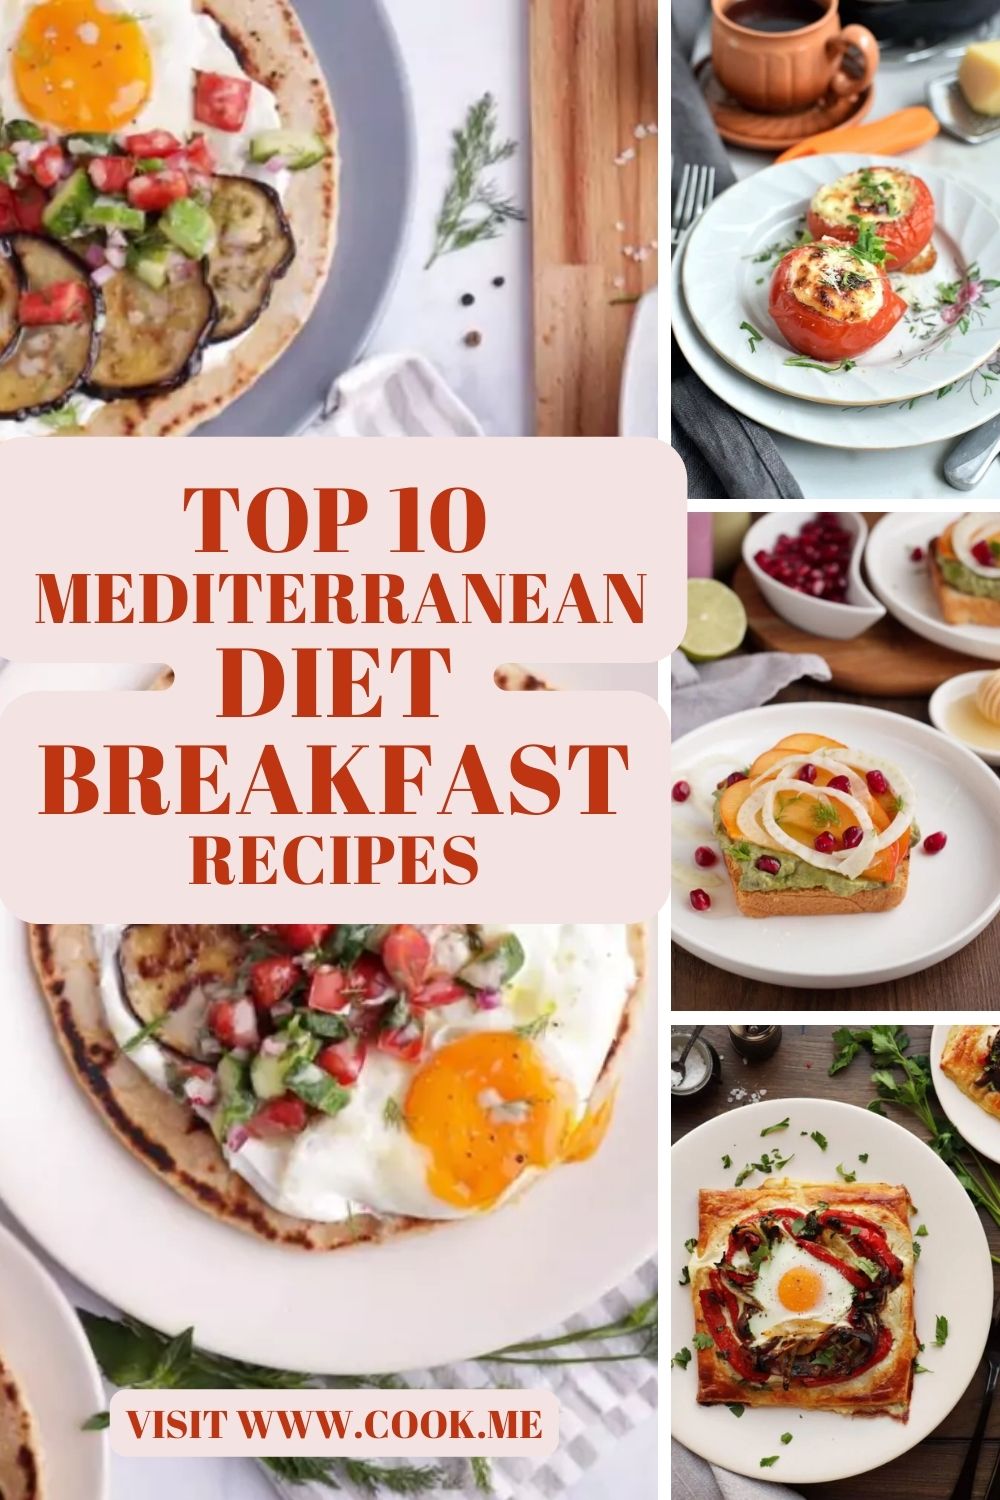 Top 10 Mediterranean Breakfast Cook.me Recipes